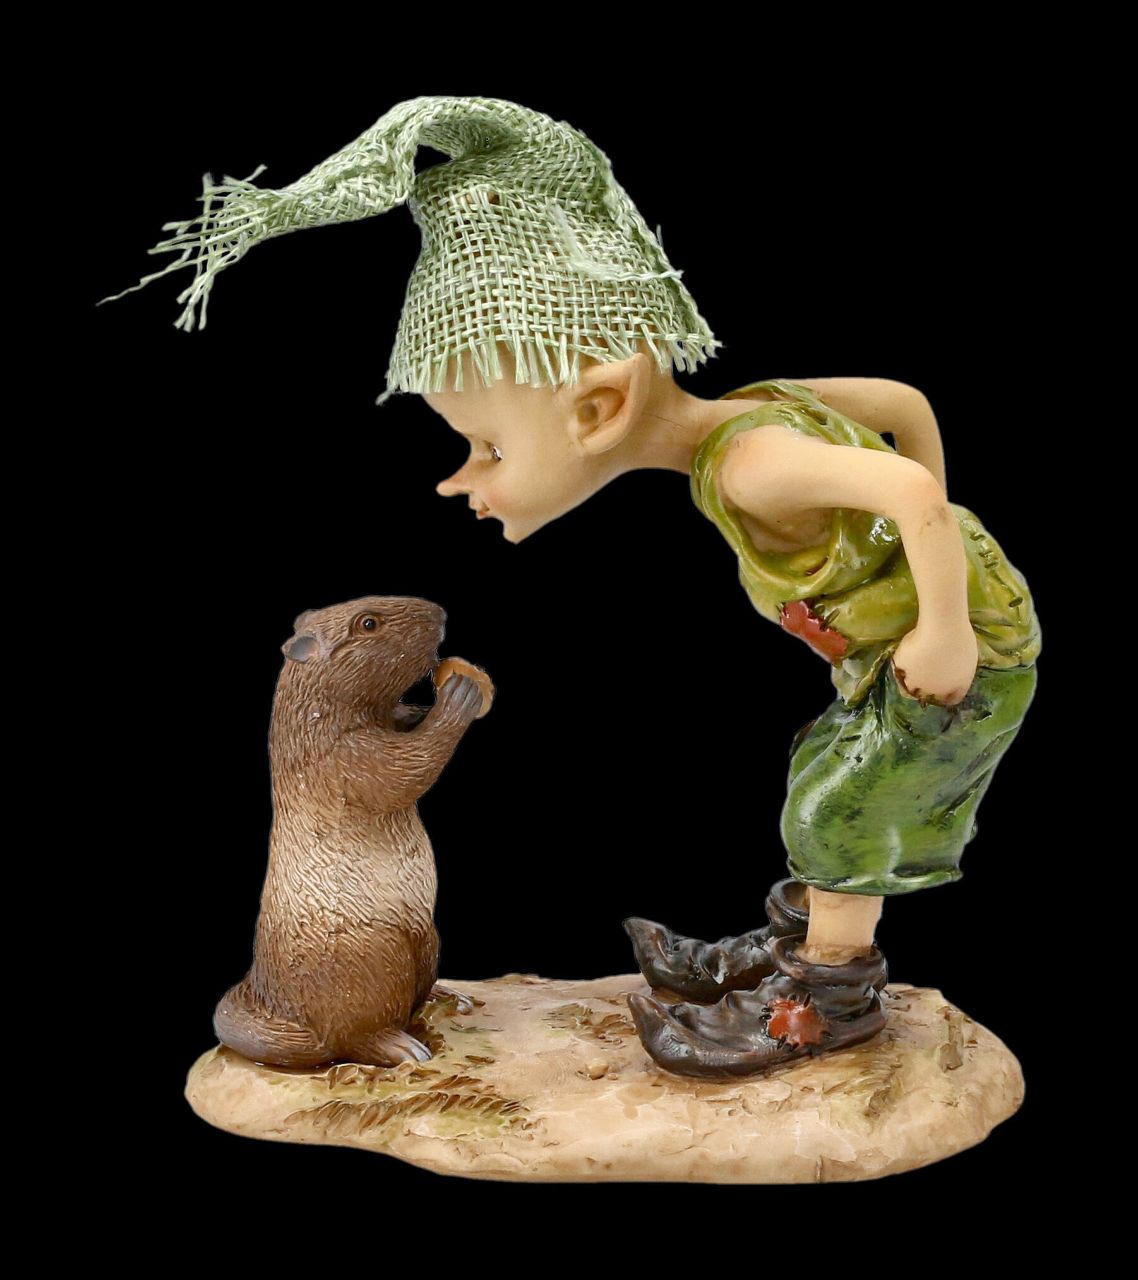 Pixie Goblin Figurine - Groundhog Day